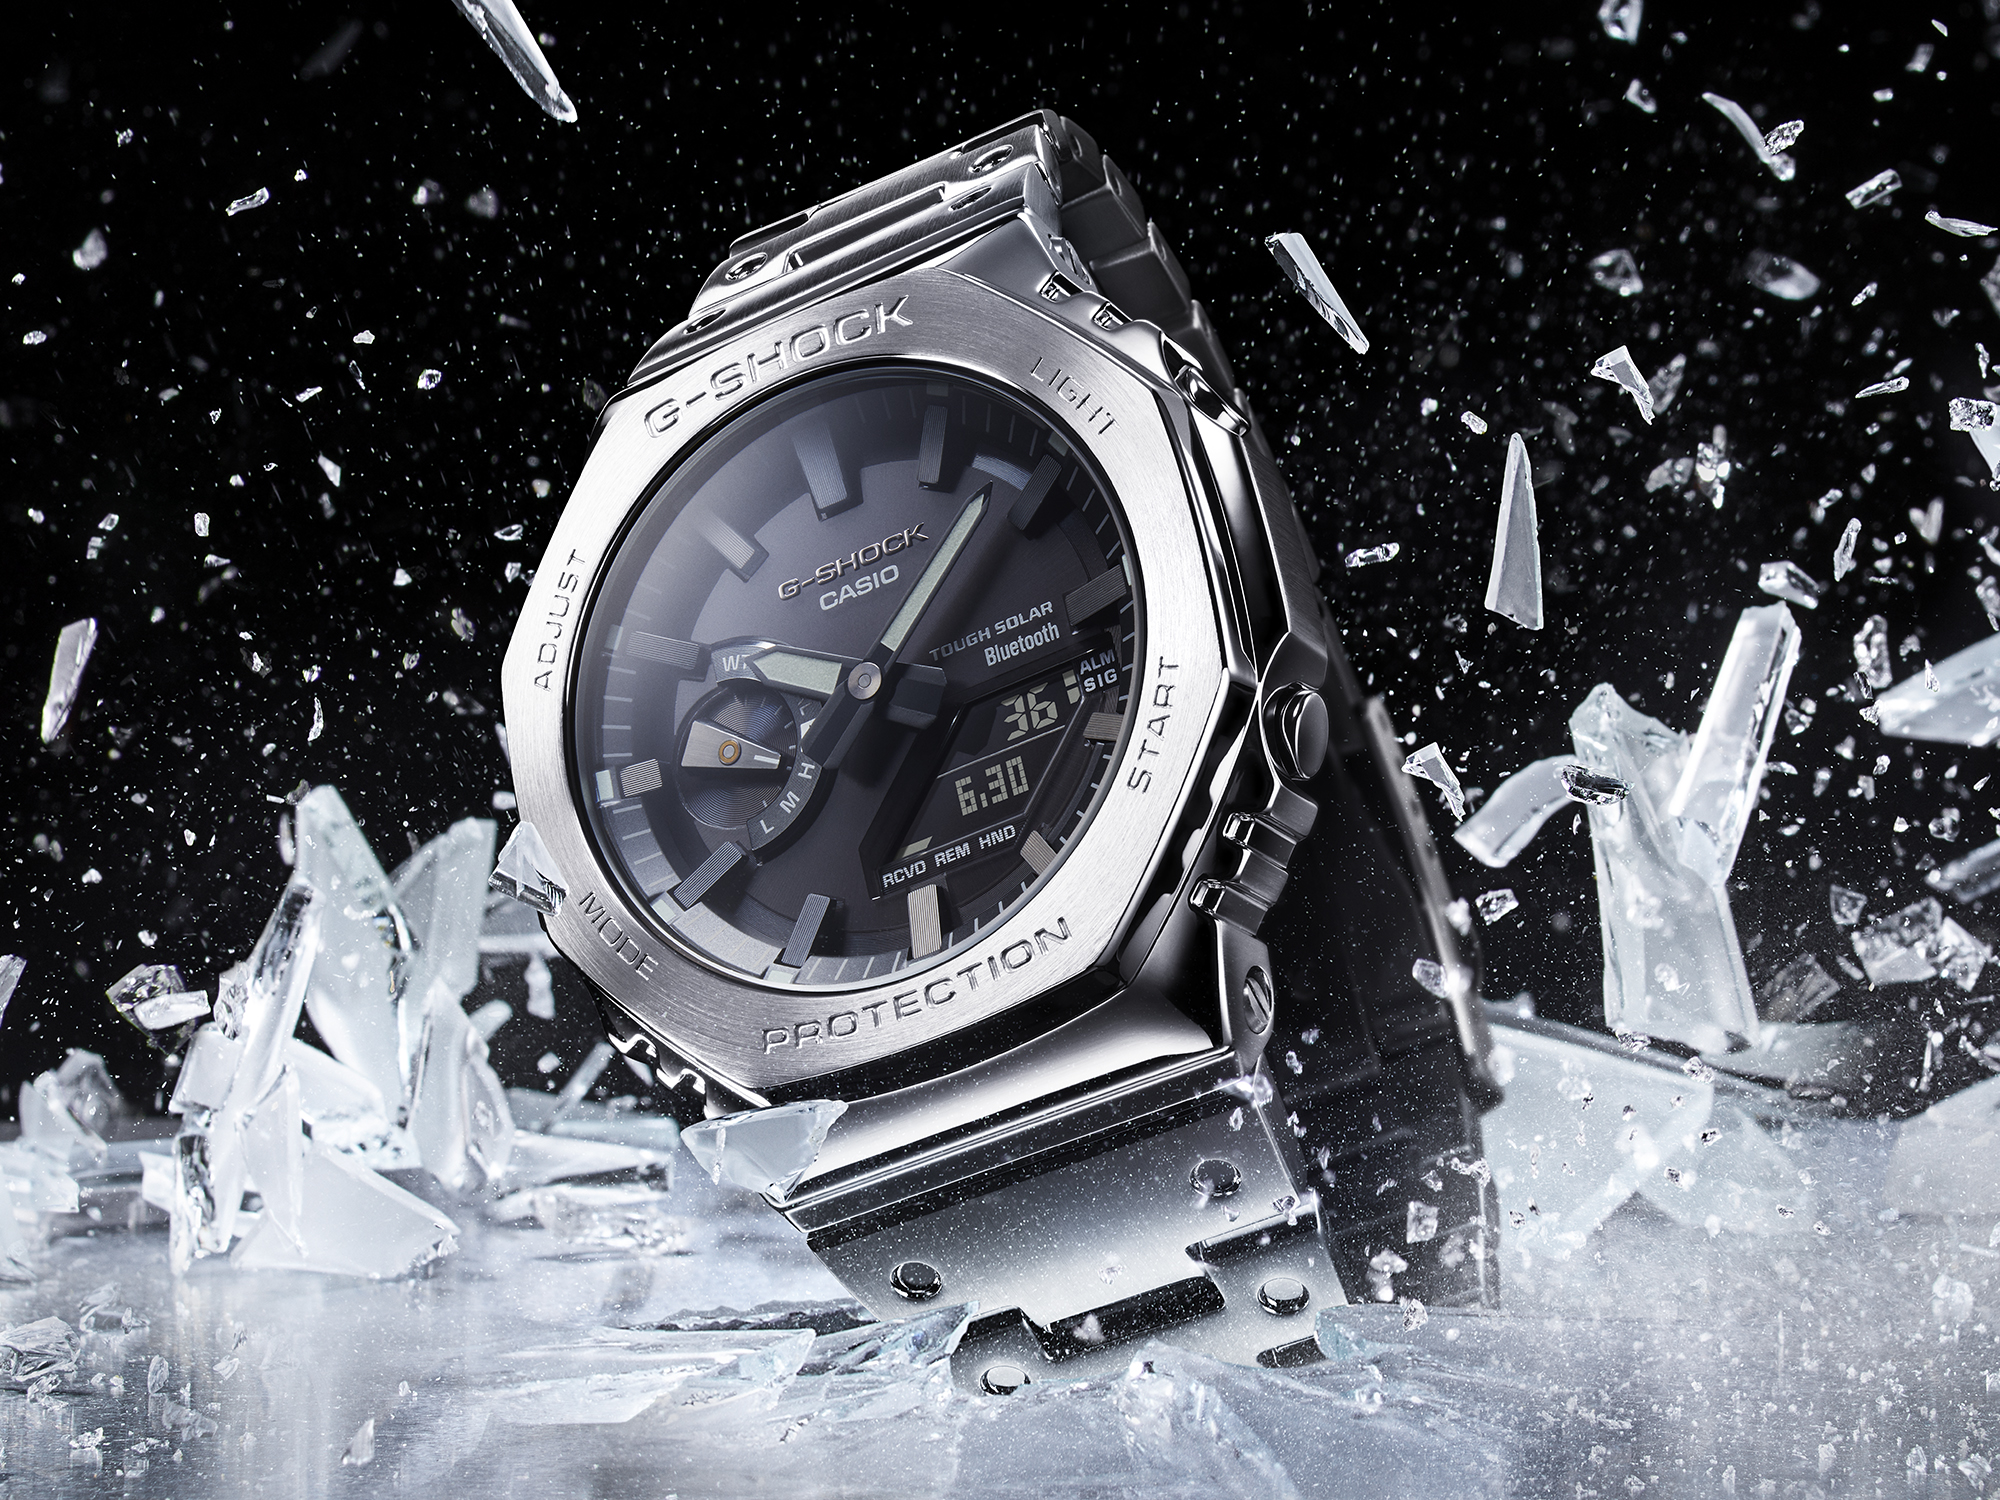 G-SHOCK GM-2100-1AJF 八角形メタルベゼルモデル 腕時計(デジタル) 時計 メンズ 安い 価格